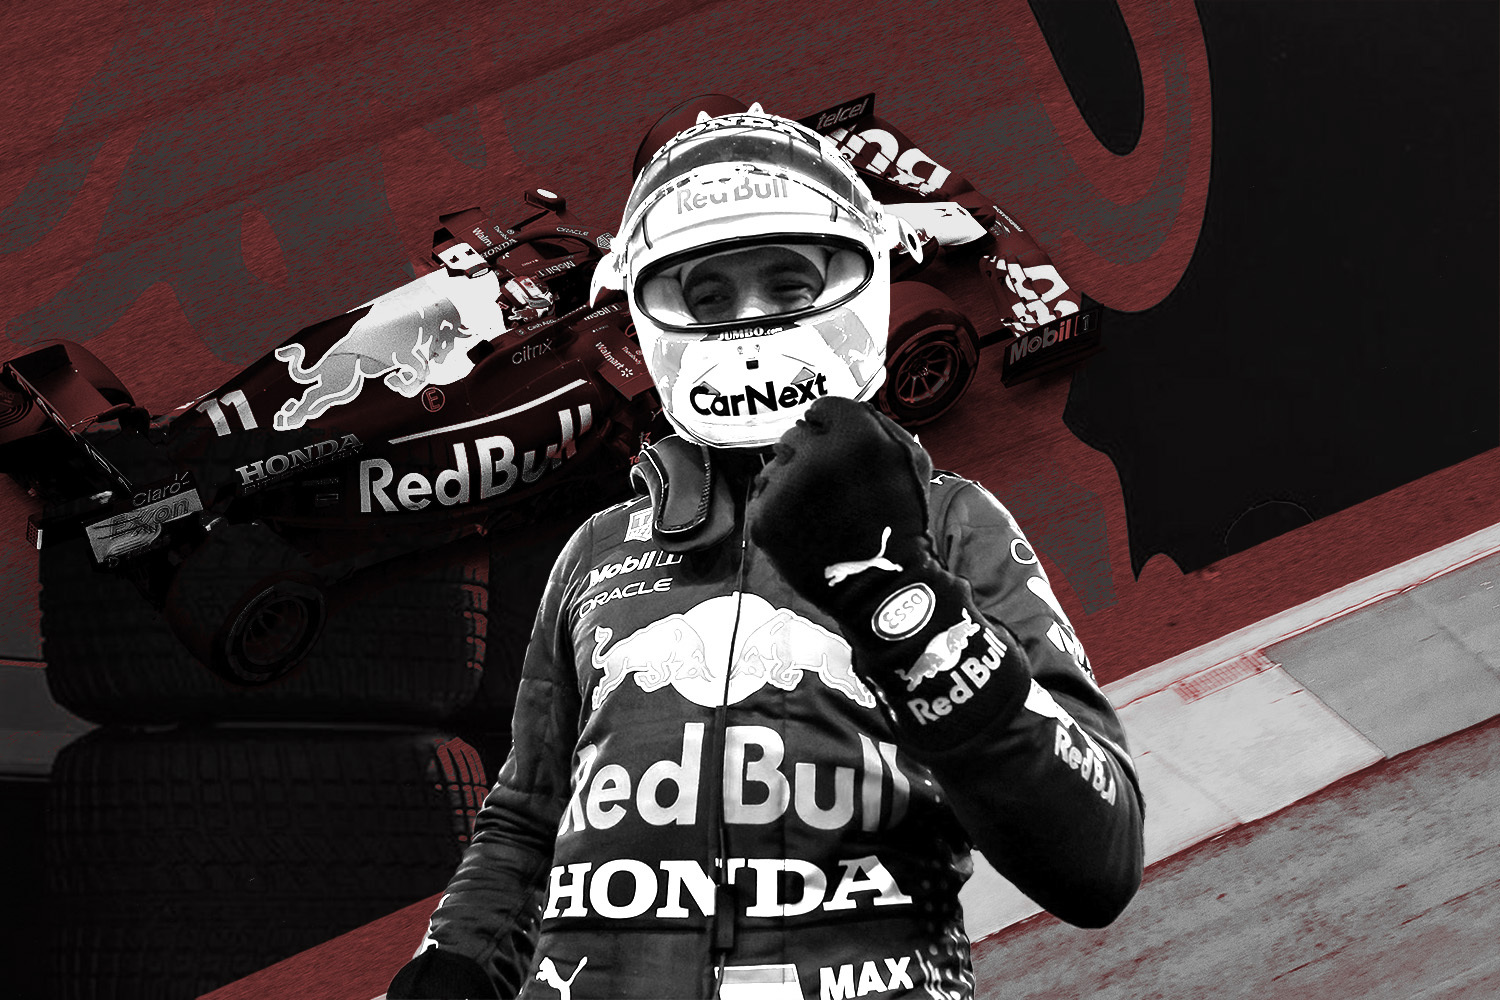 Customer story: Oracle Red Bull Racing